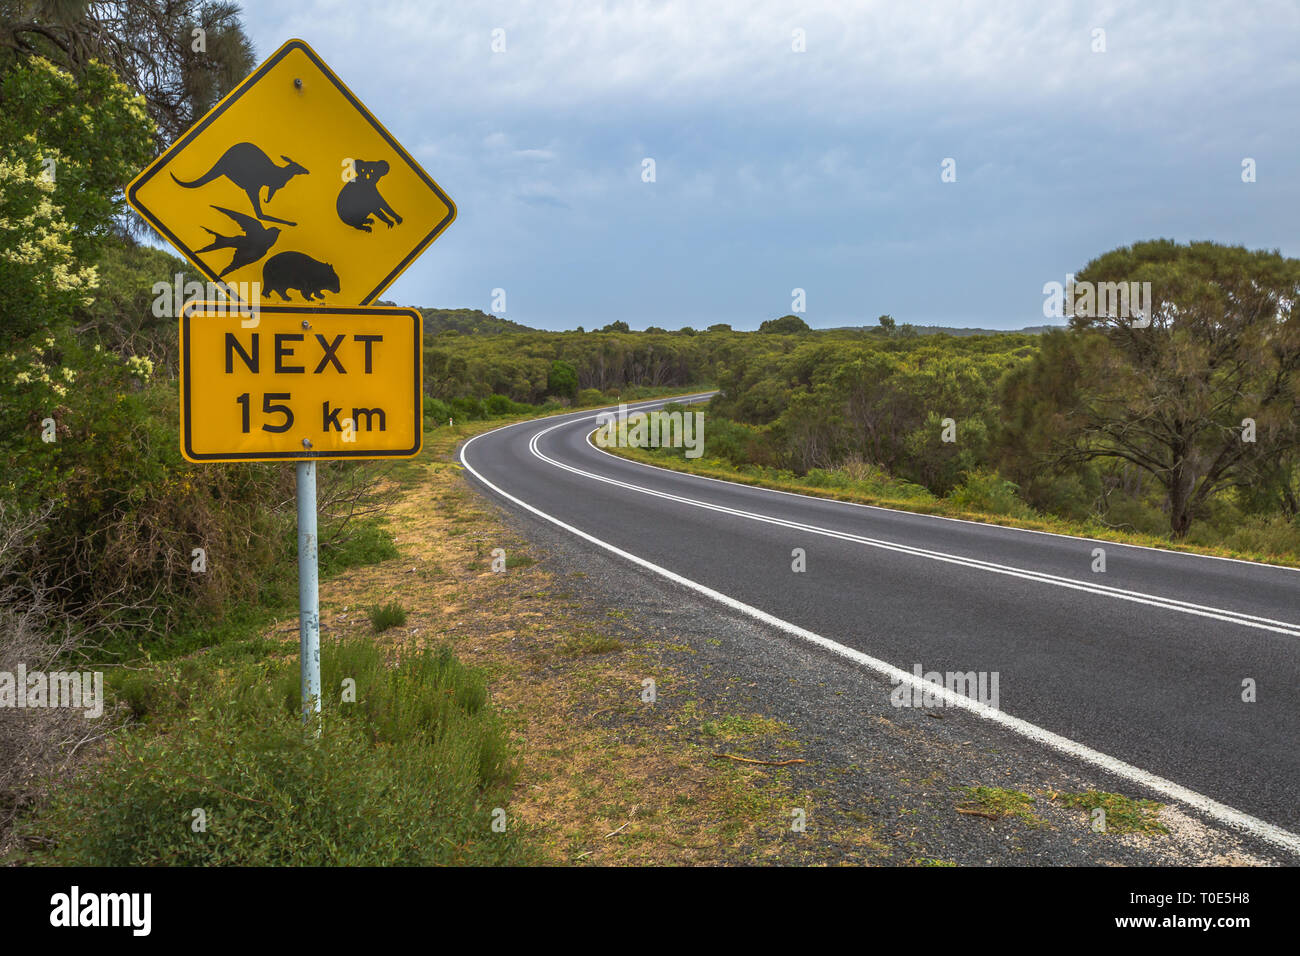 Warning sign for wildlife crossing on australian road: kangaroos, koalas, birds, wombats Stock Photo